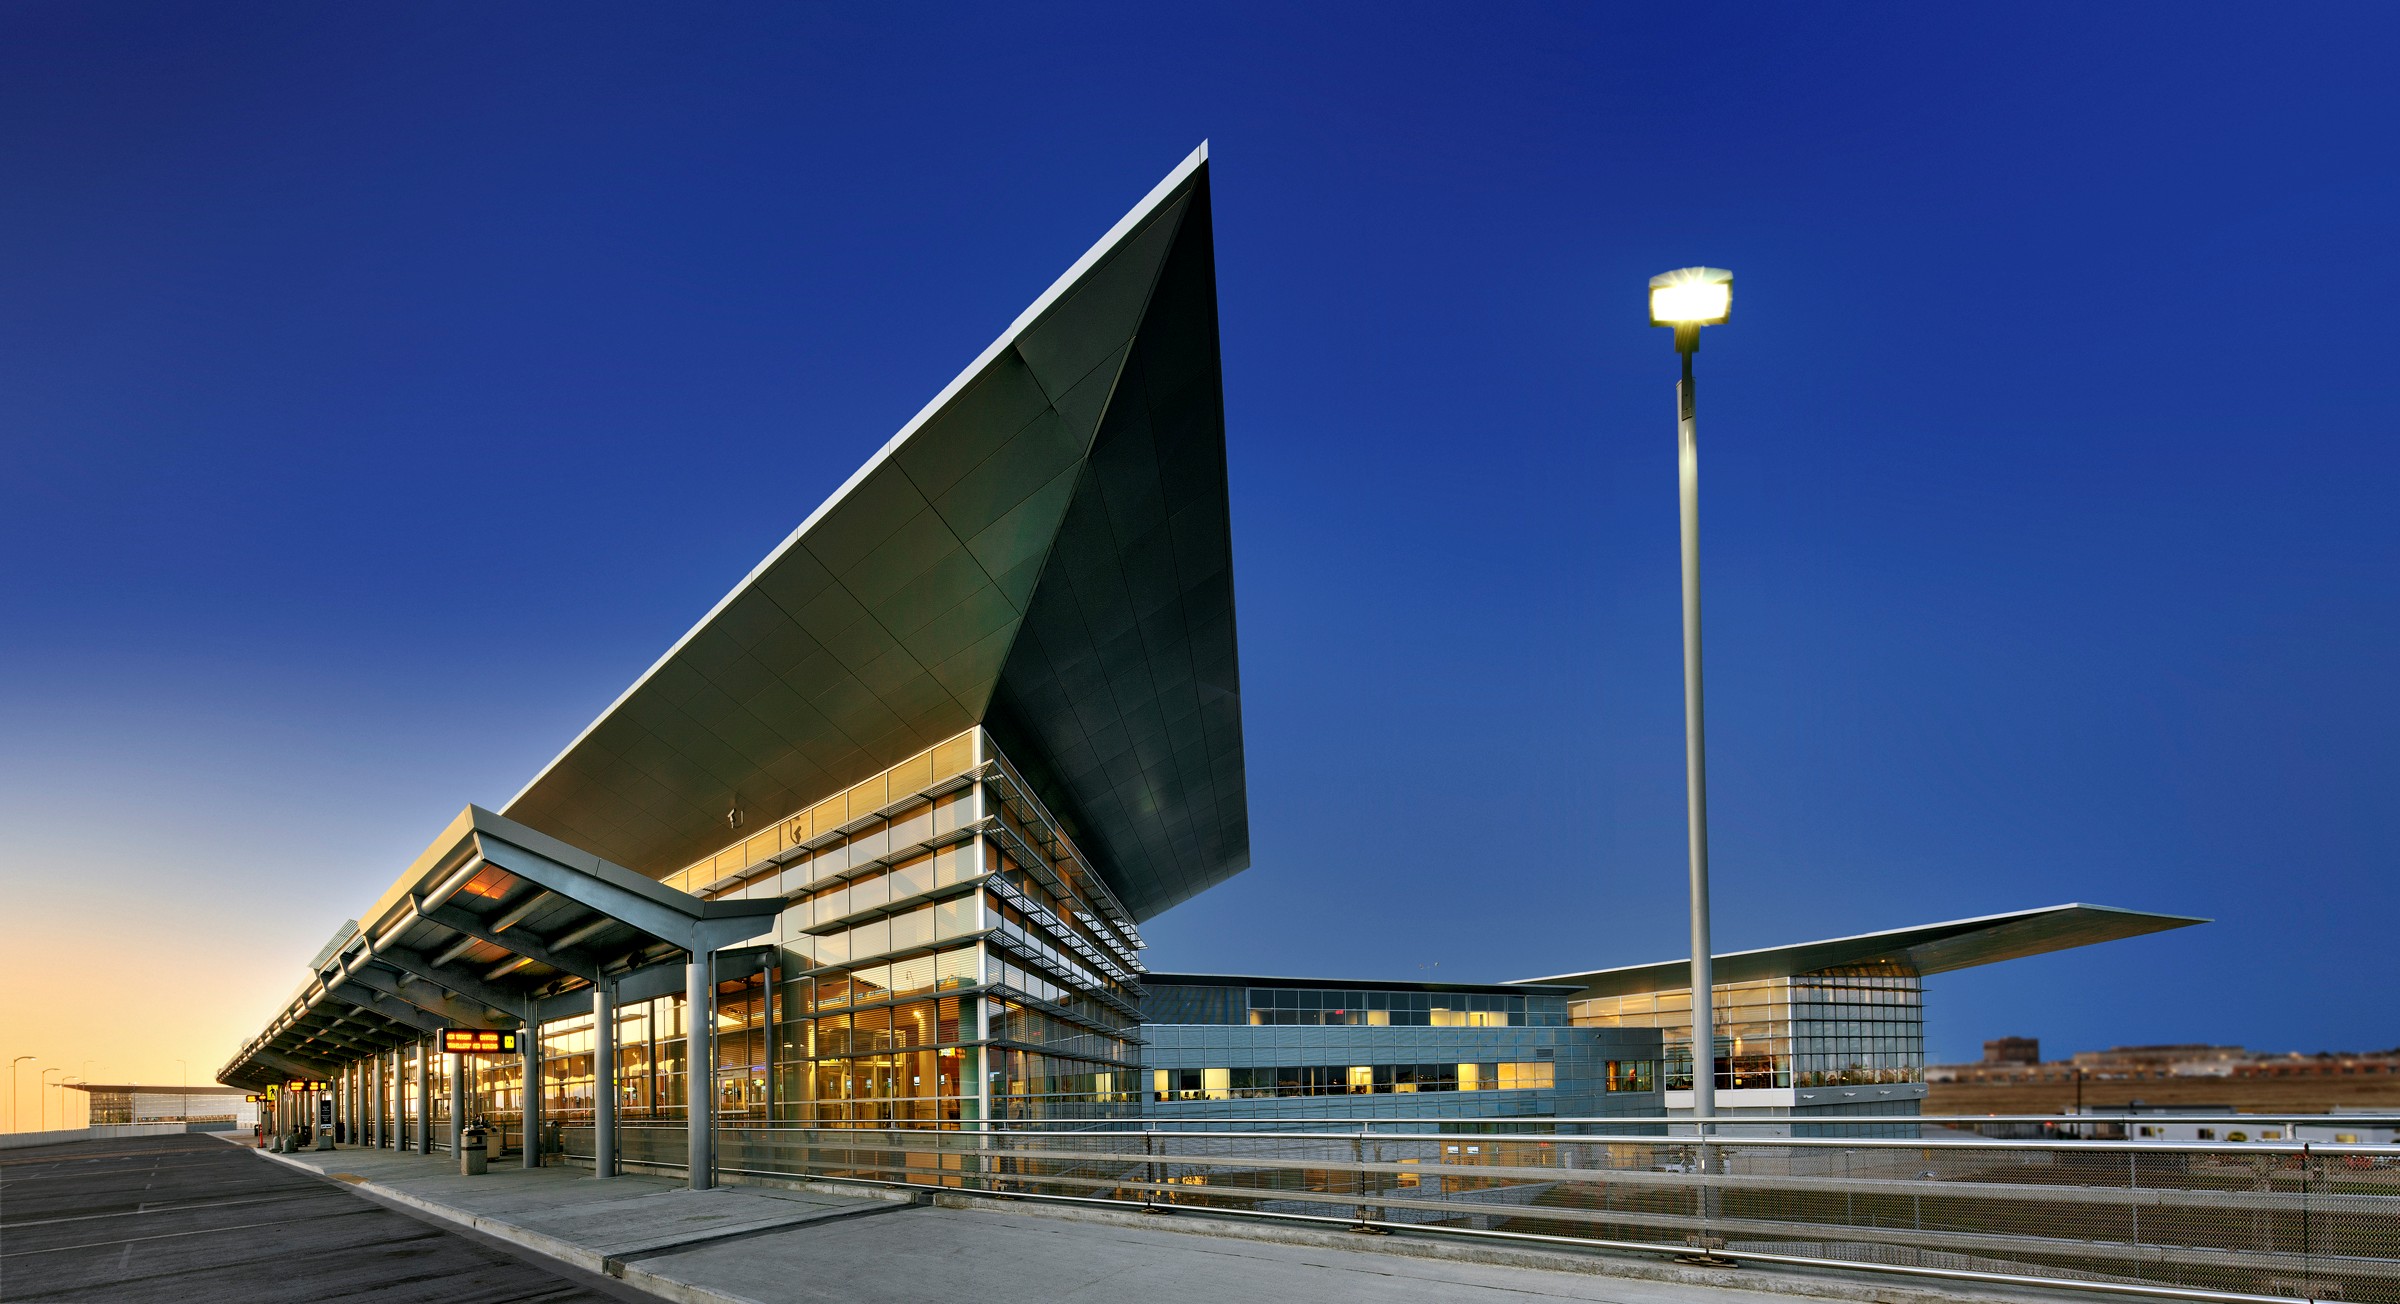 The Winnipeg J.A.R. International Airport